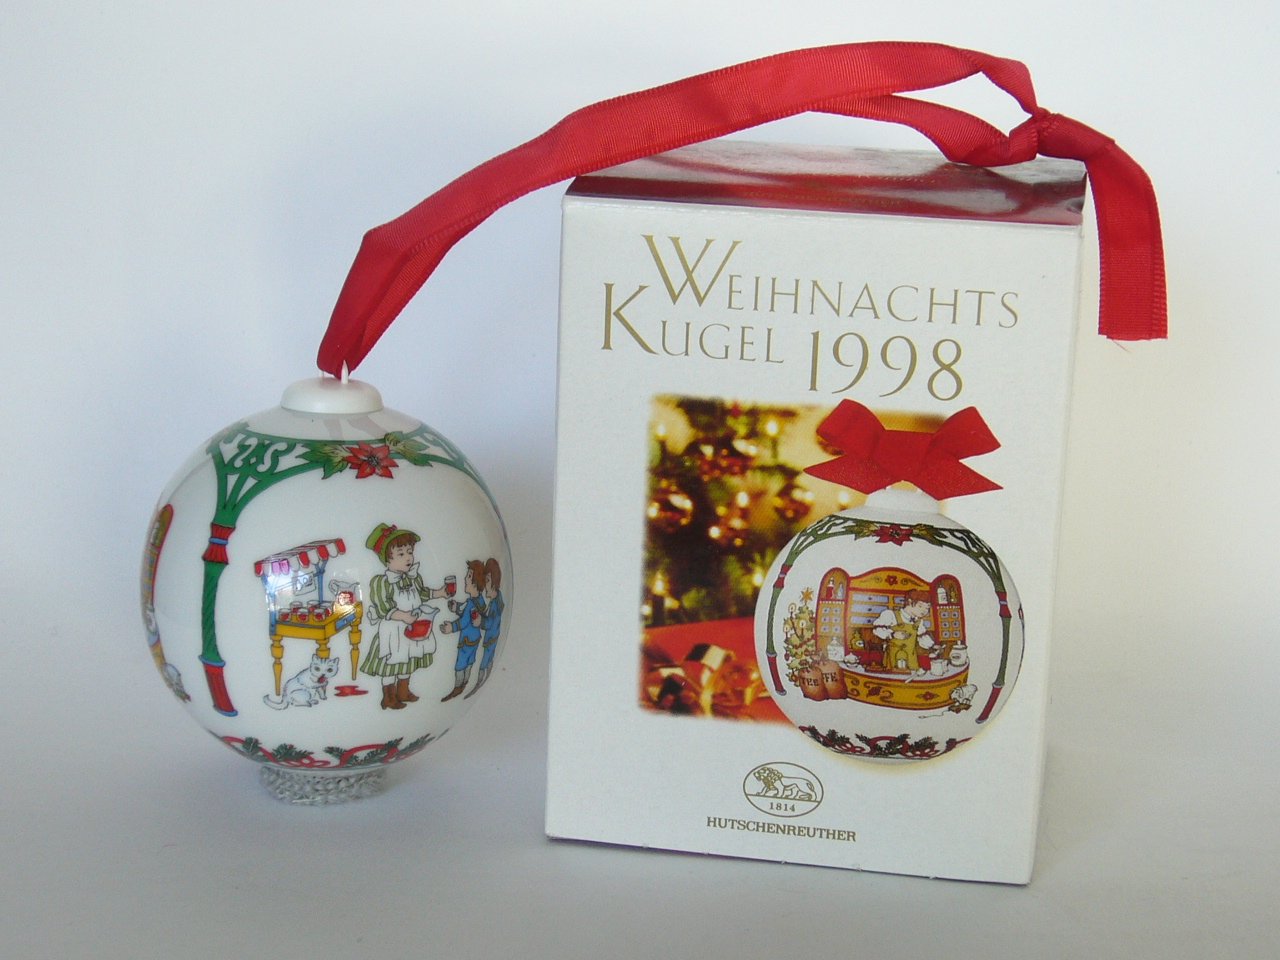 Hutschenreuther Weihnachtskugel 1998*Rarität, Weihnachten, Porzellankugel, Baumschmuck, Baumanhänger, Anhänger